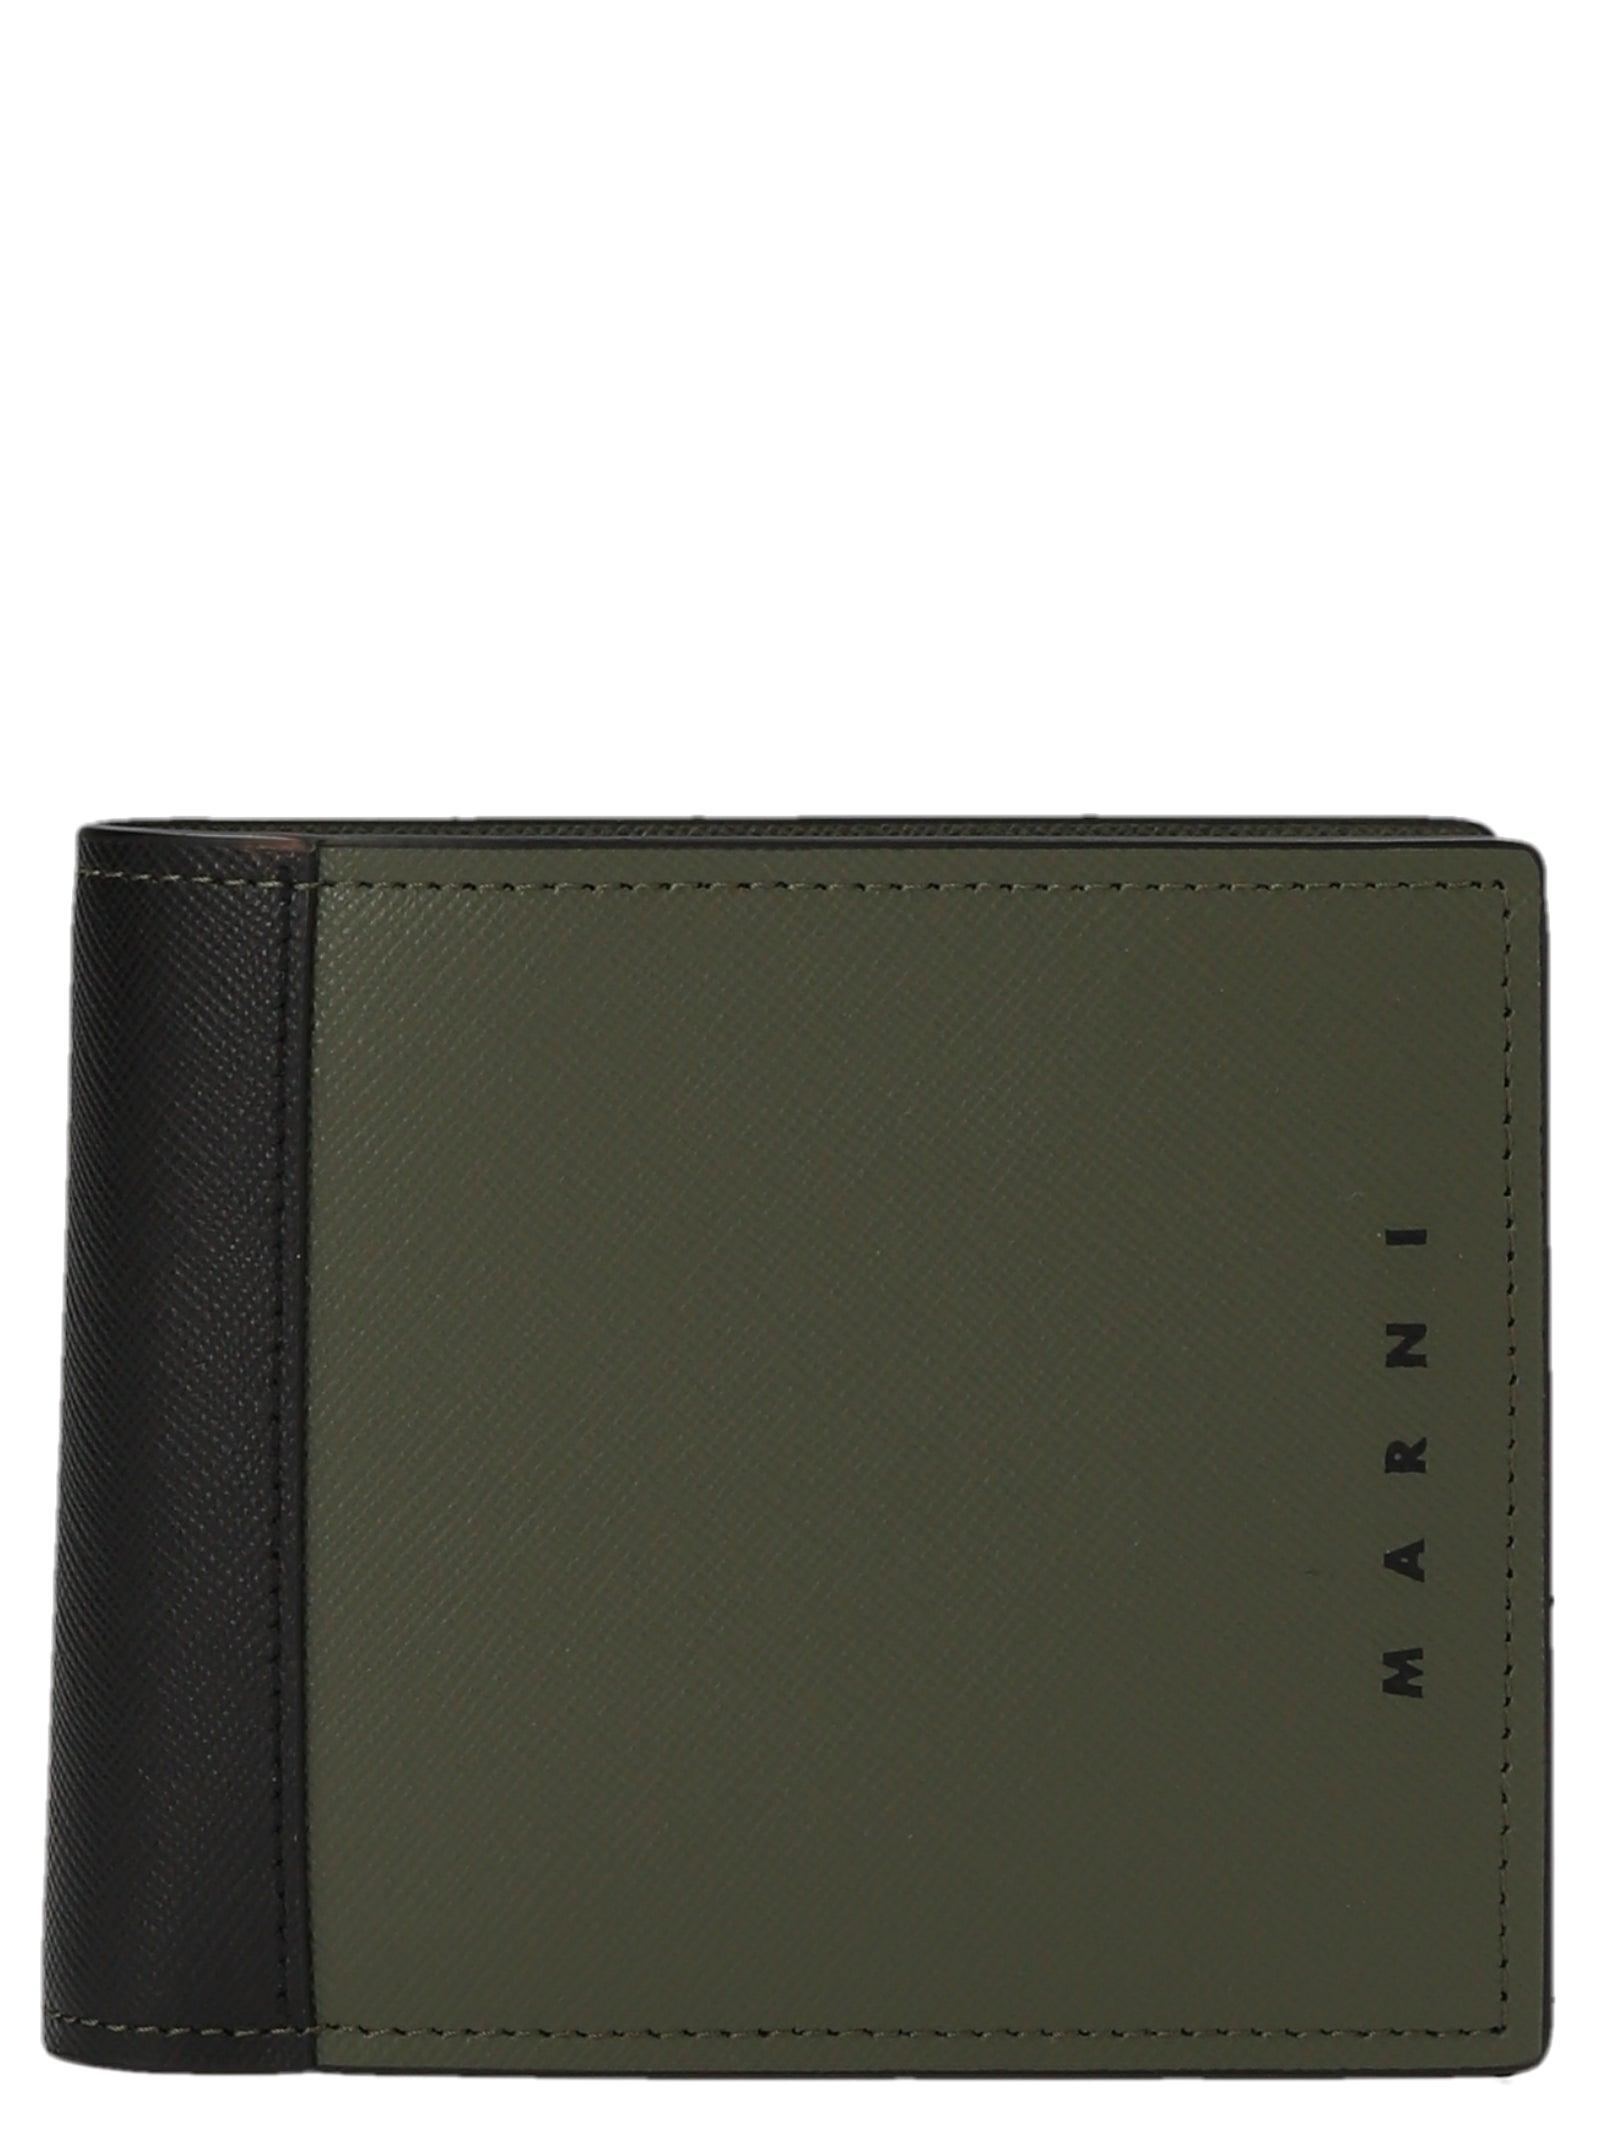 Marni Bi-color Wallet in Green for Men | Lyst